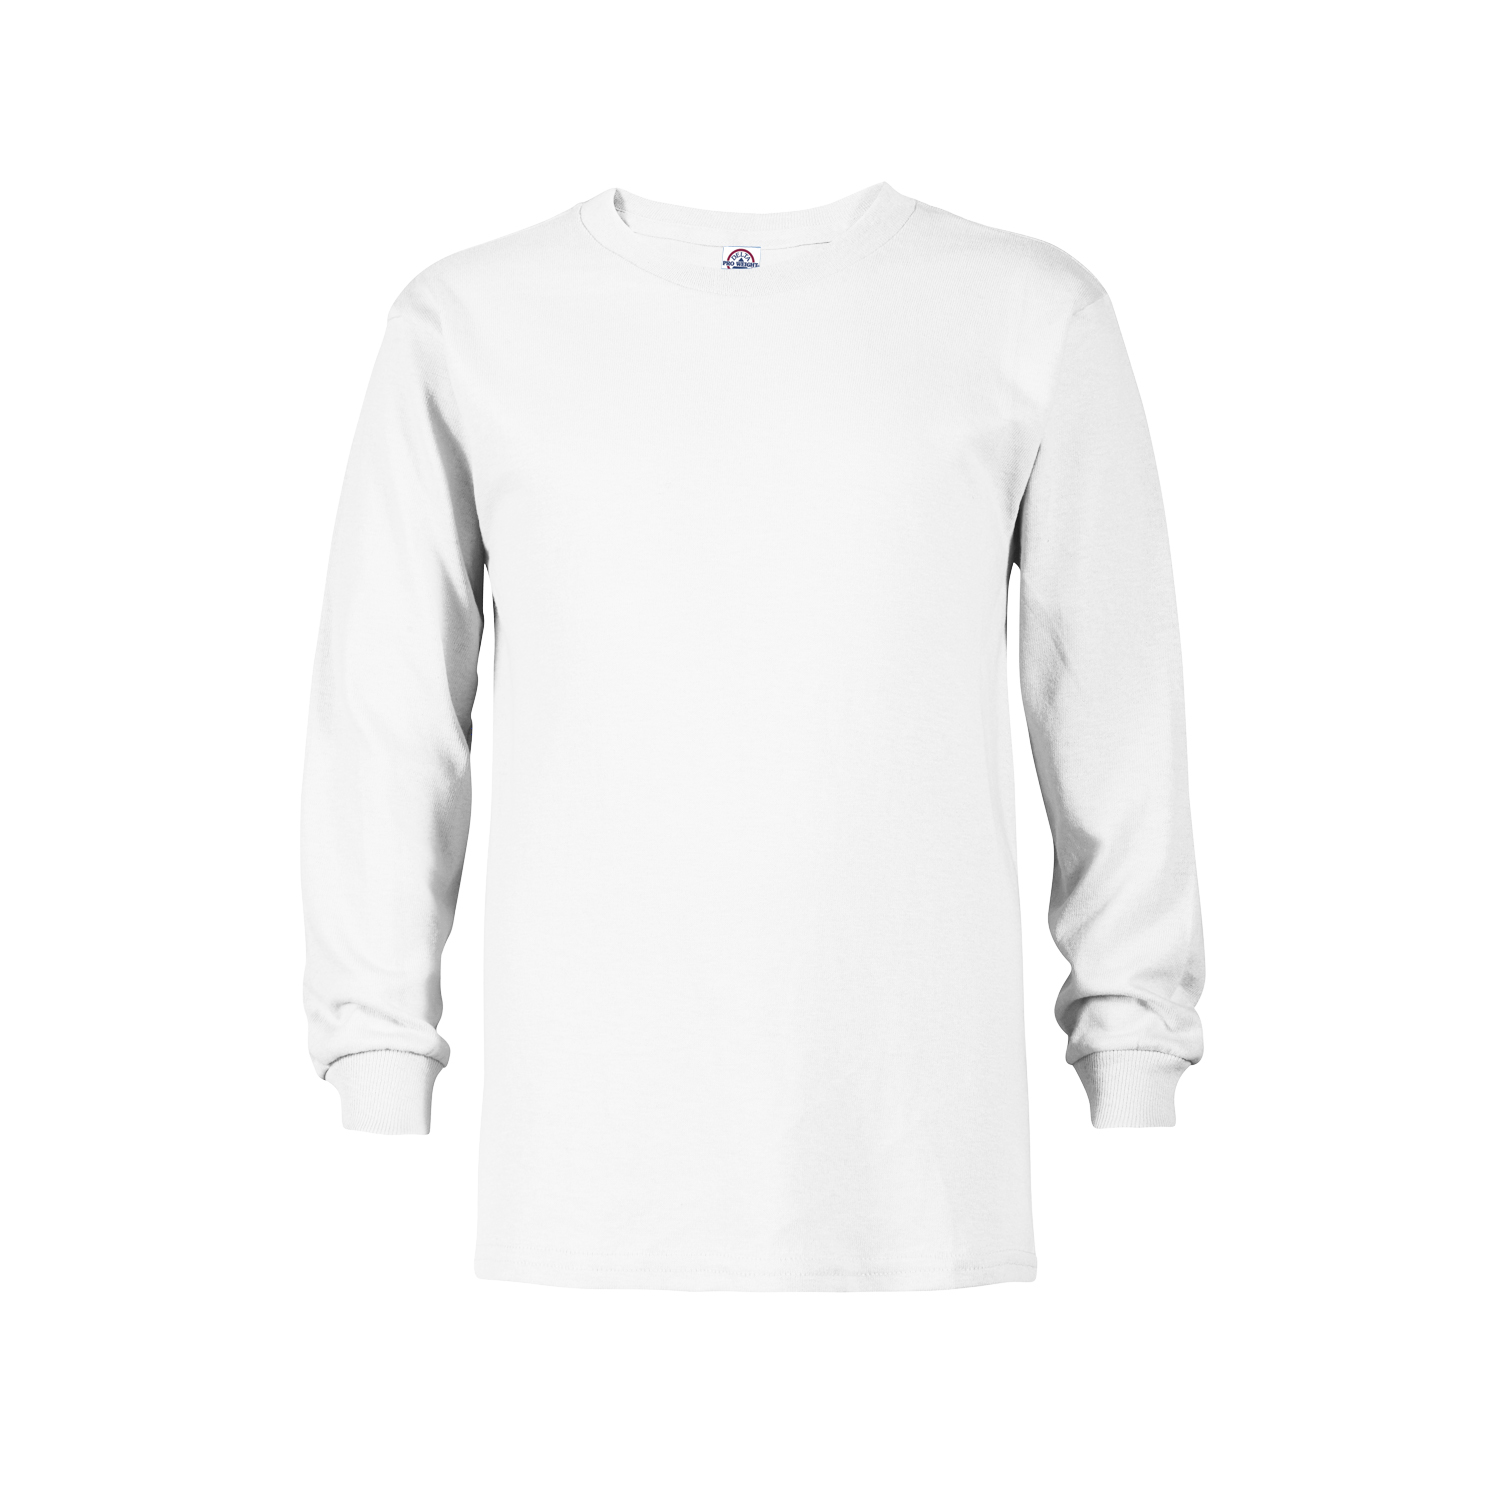 Hanes Boys Youth ComfortSoft Tagless Long-Sleeve T-Shirt 5546